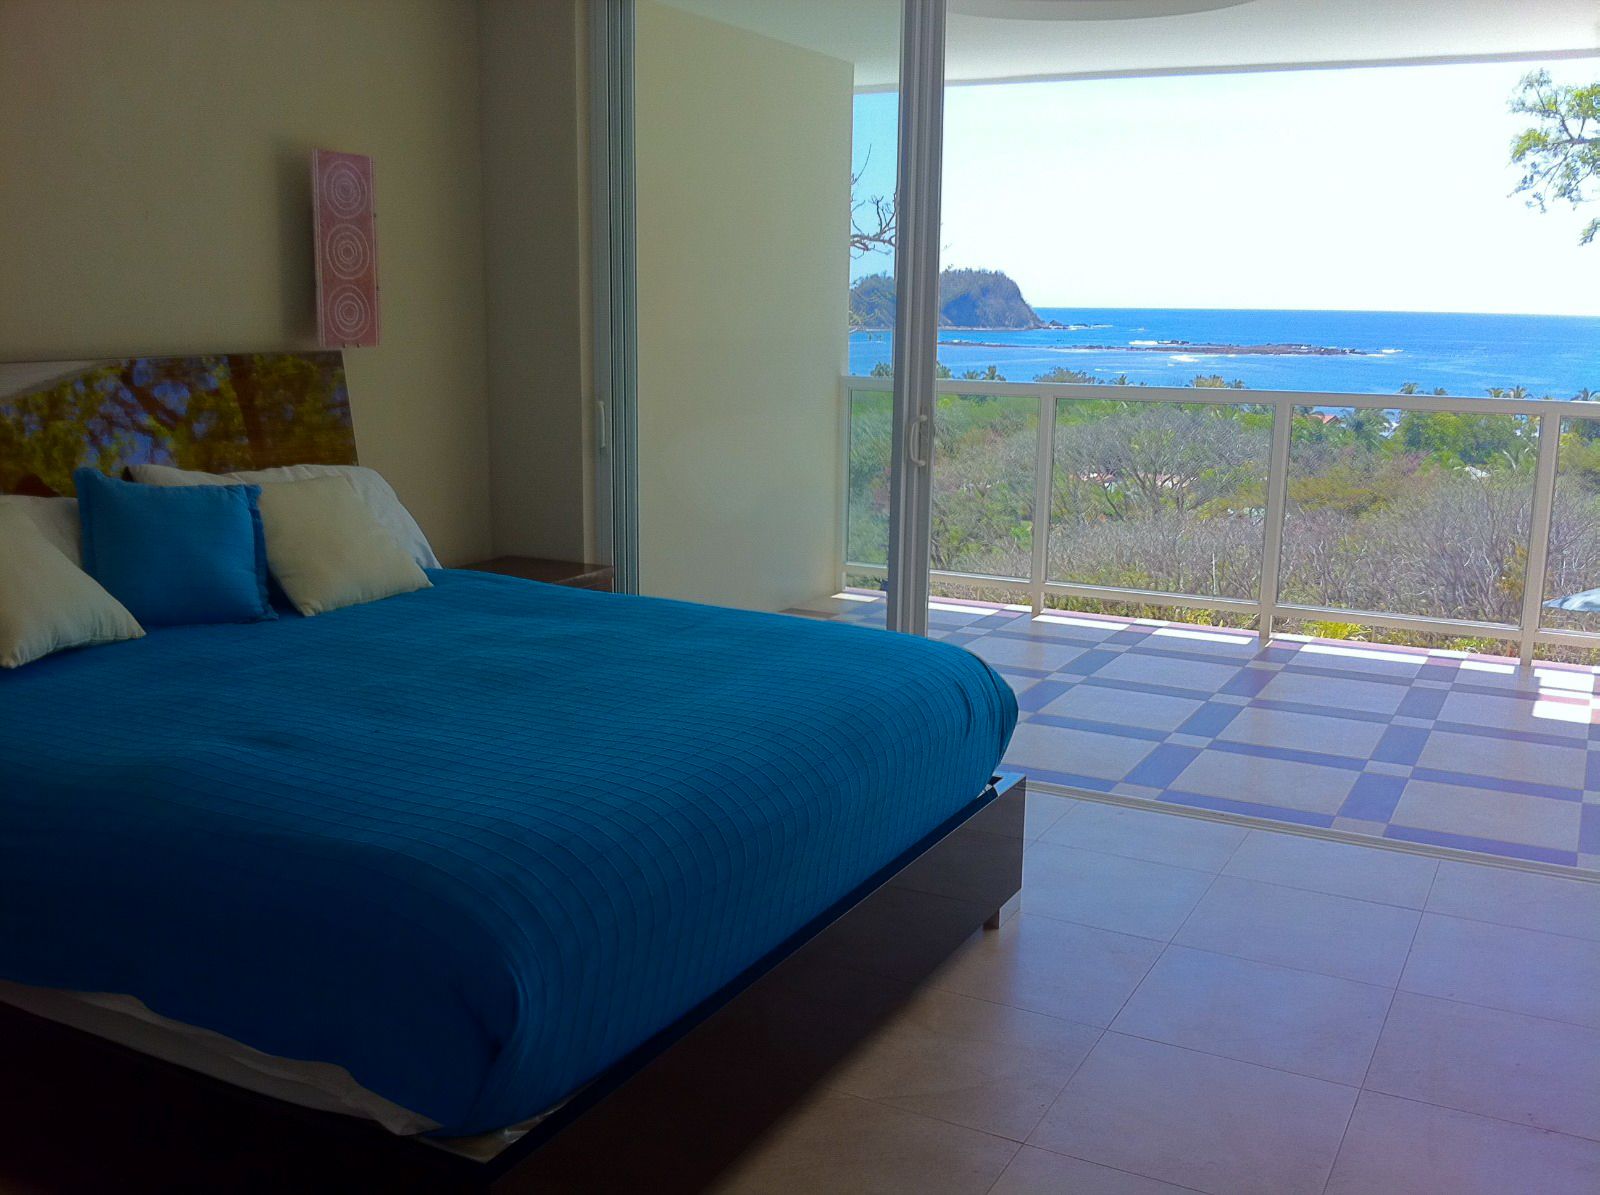 Queen sized bed with balcony overlooking the ocean Samara reef Condo for sale Samara Guanacaste Costa Rica